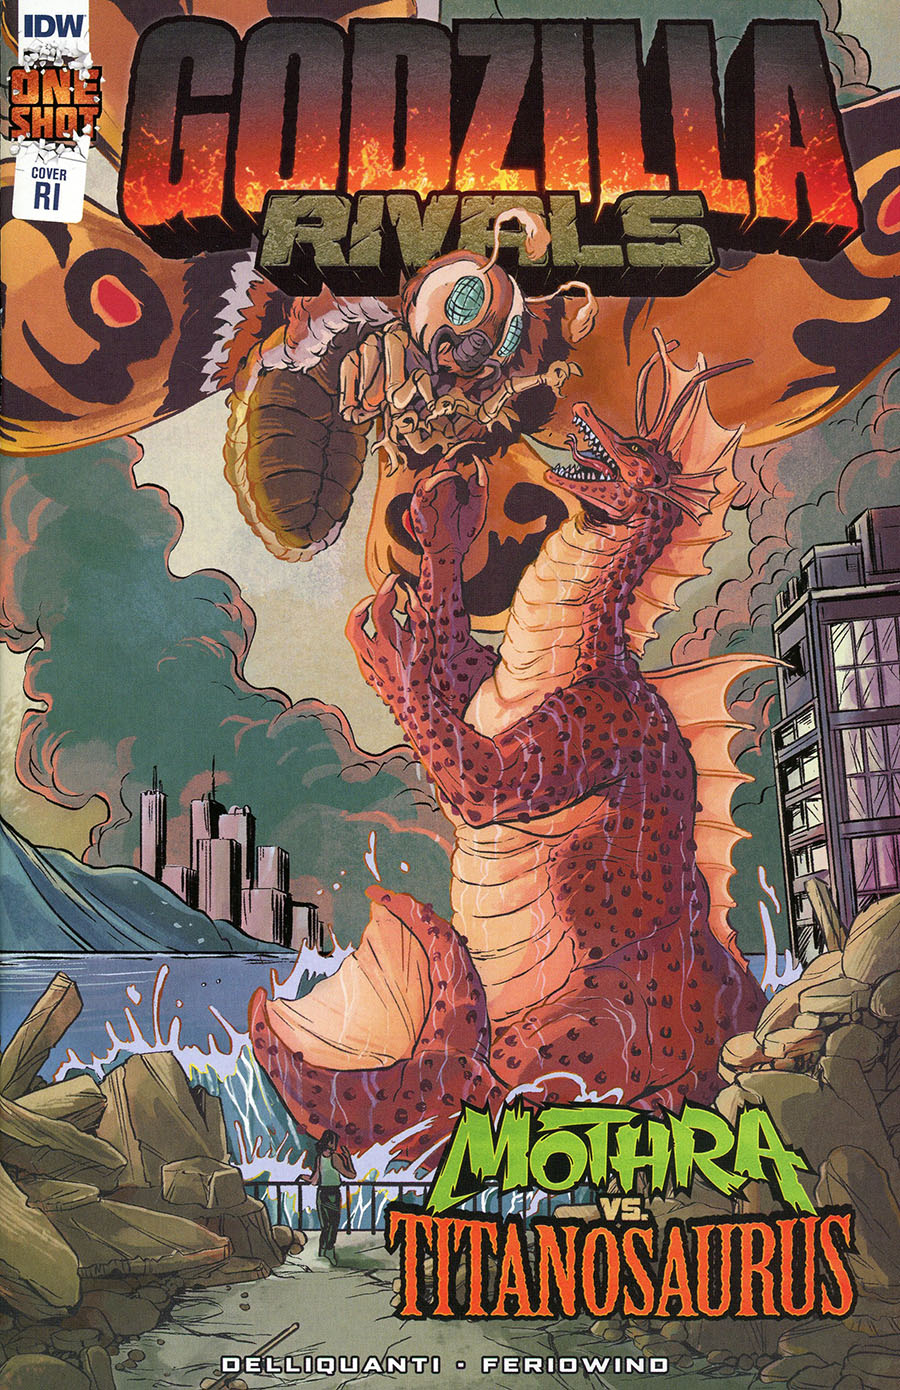 Godzilla Rivals Mothra vs Titanosaurus #1 (One Shot) Cover C Incentive G Romero-Johnson Variant Cover